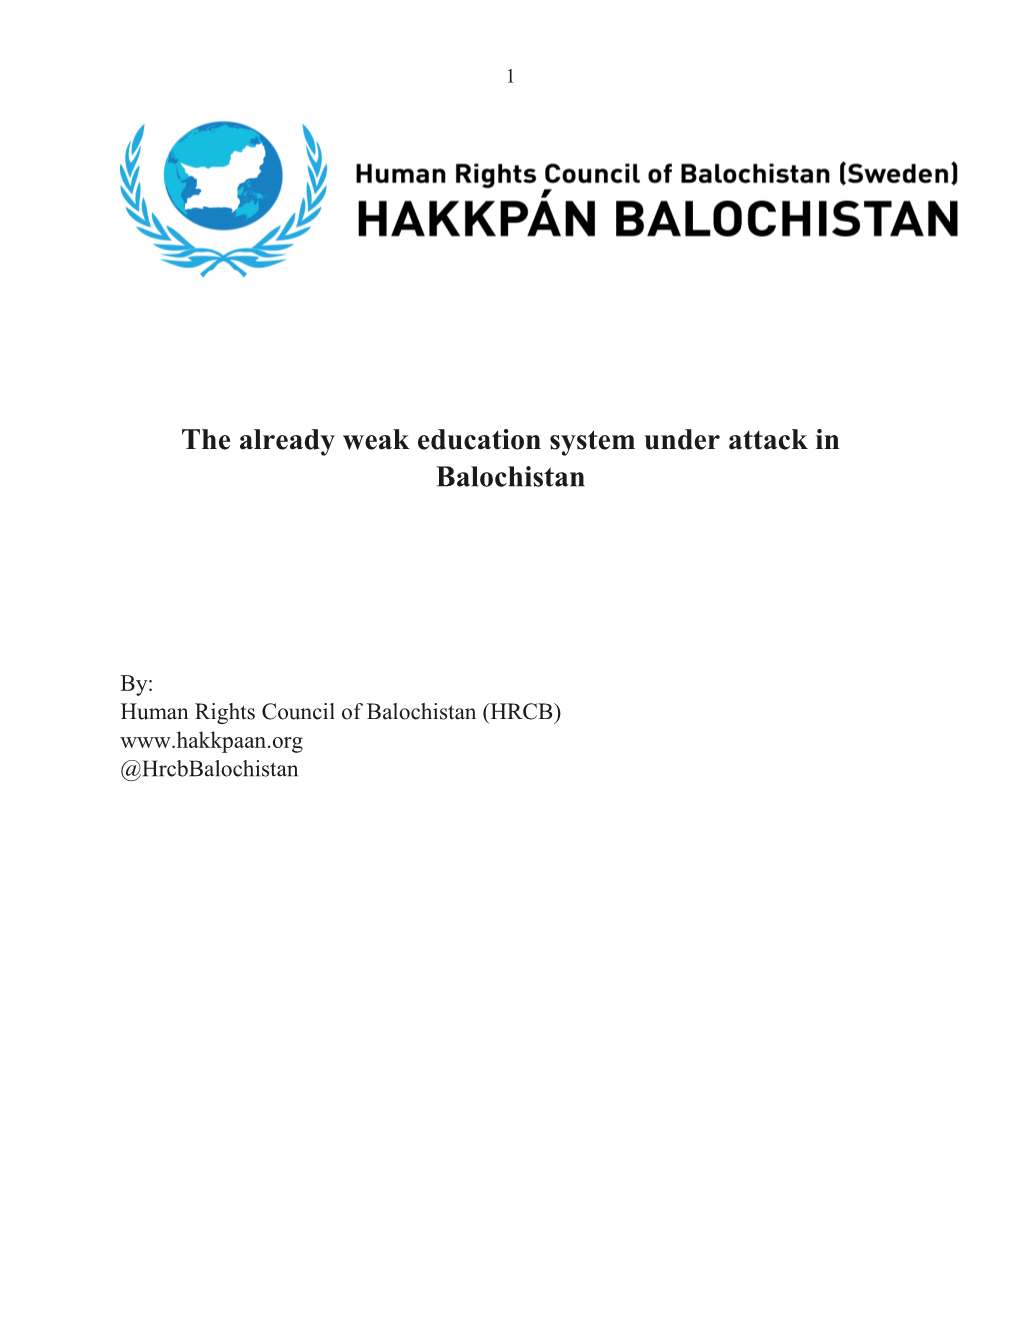 The Already Weak Education System Under Attack in Balochistan